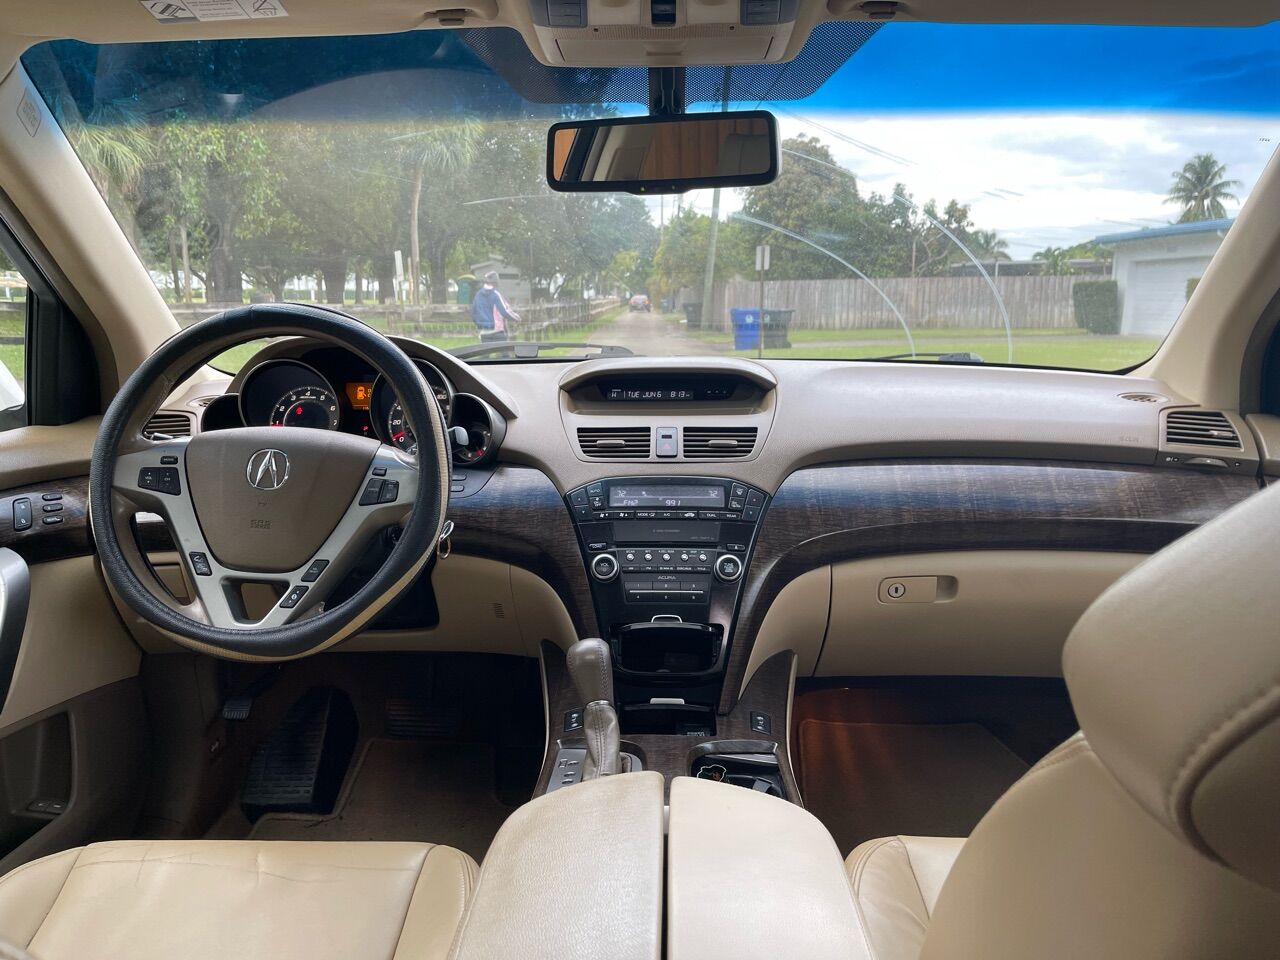 2012 ACURA MDX SUV / Crossover - $9,500